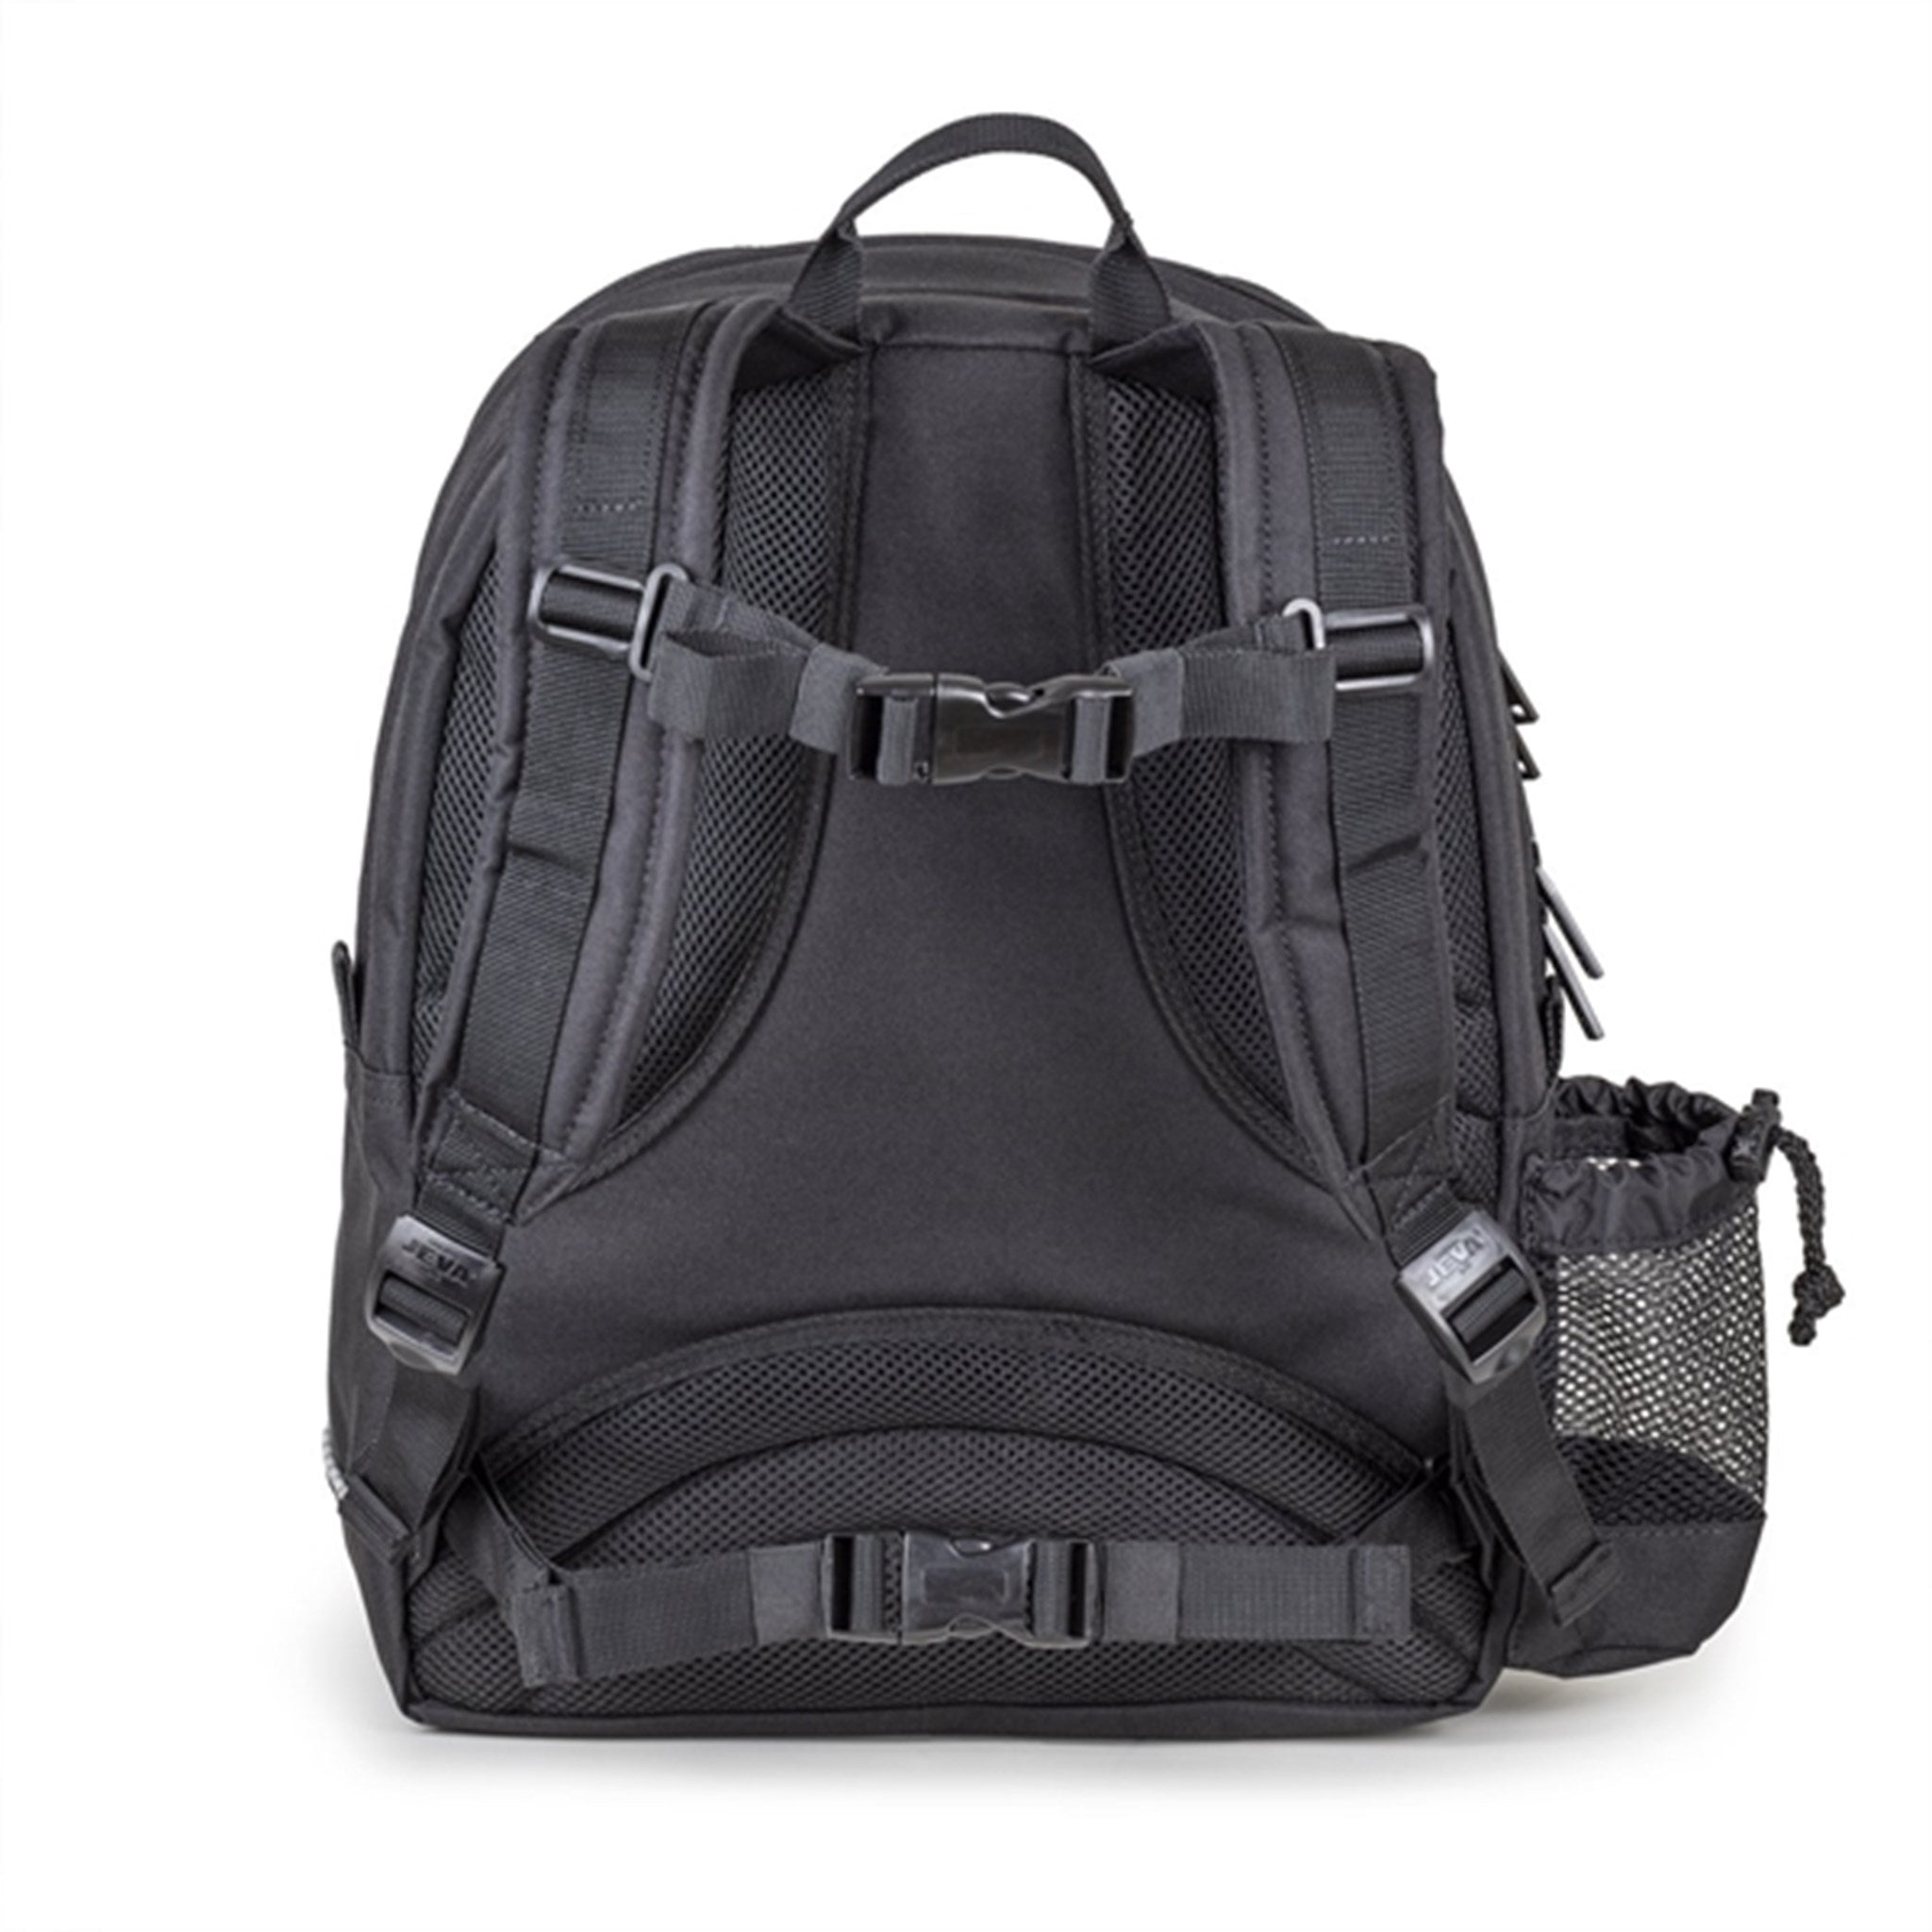 JEVA Backpack Black 2